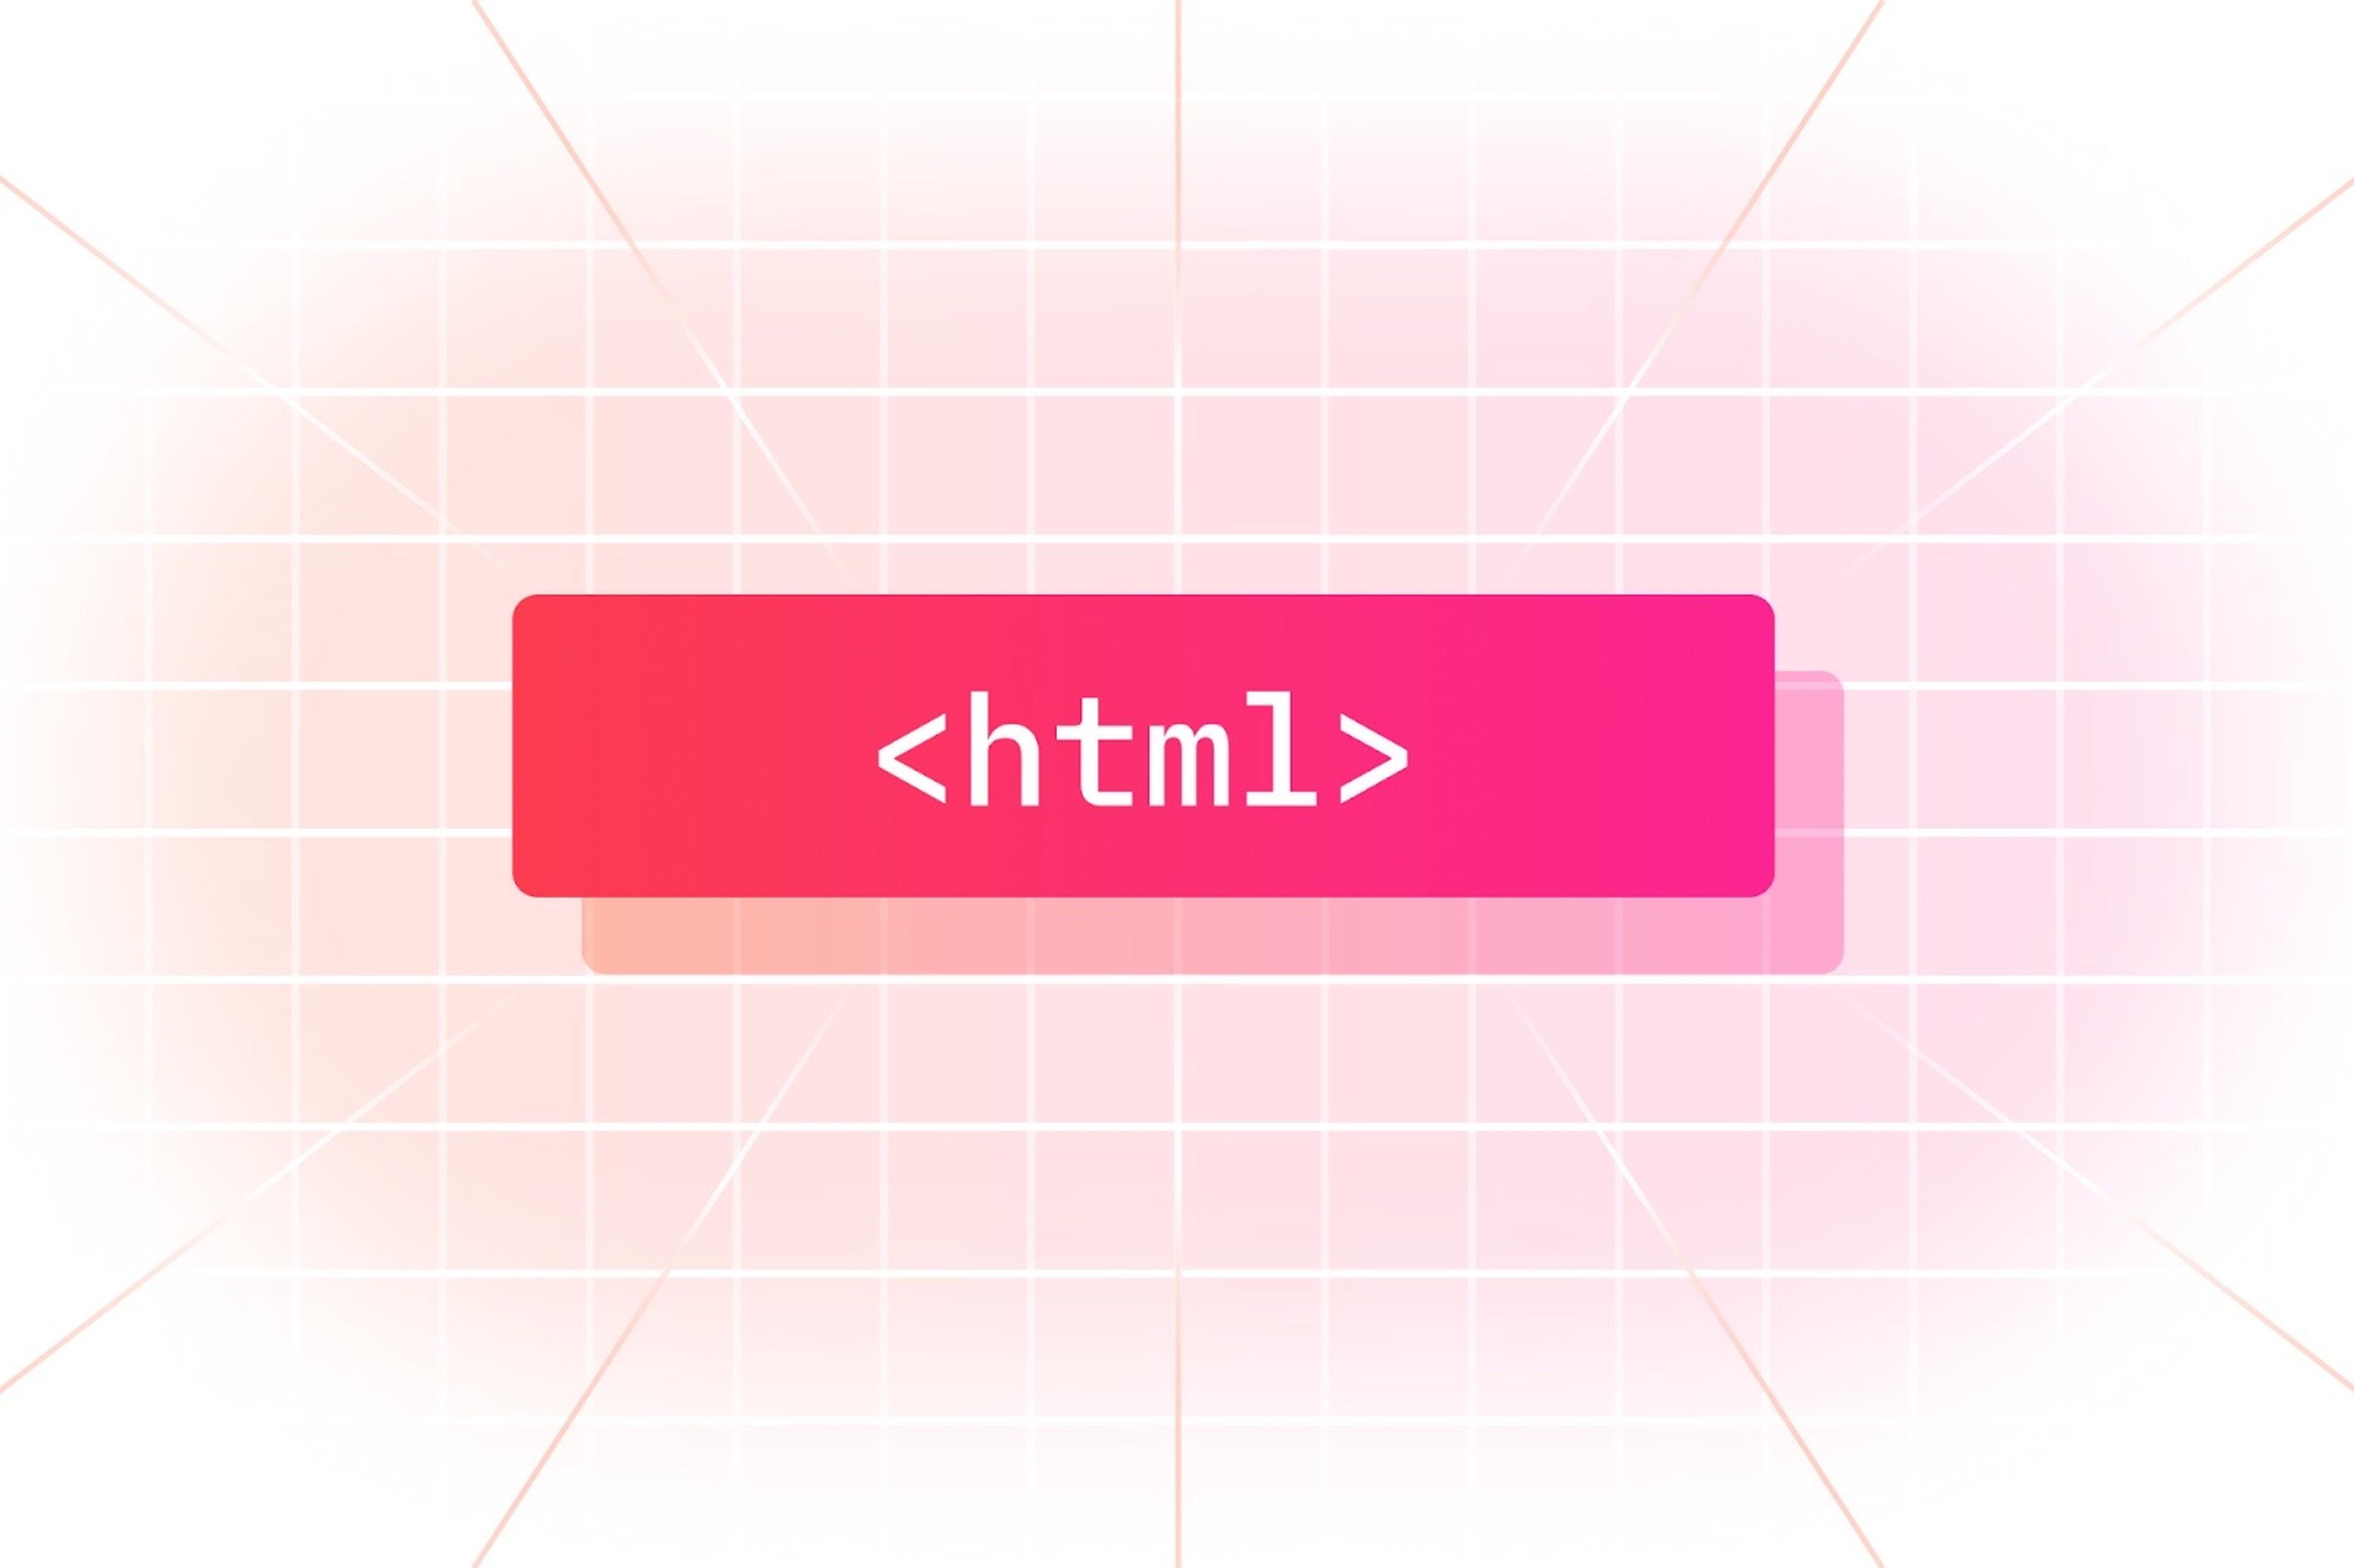 An html tag.